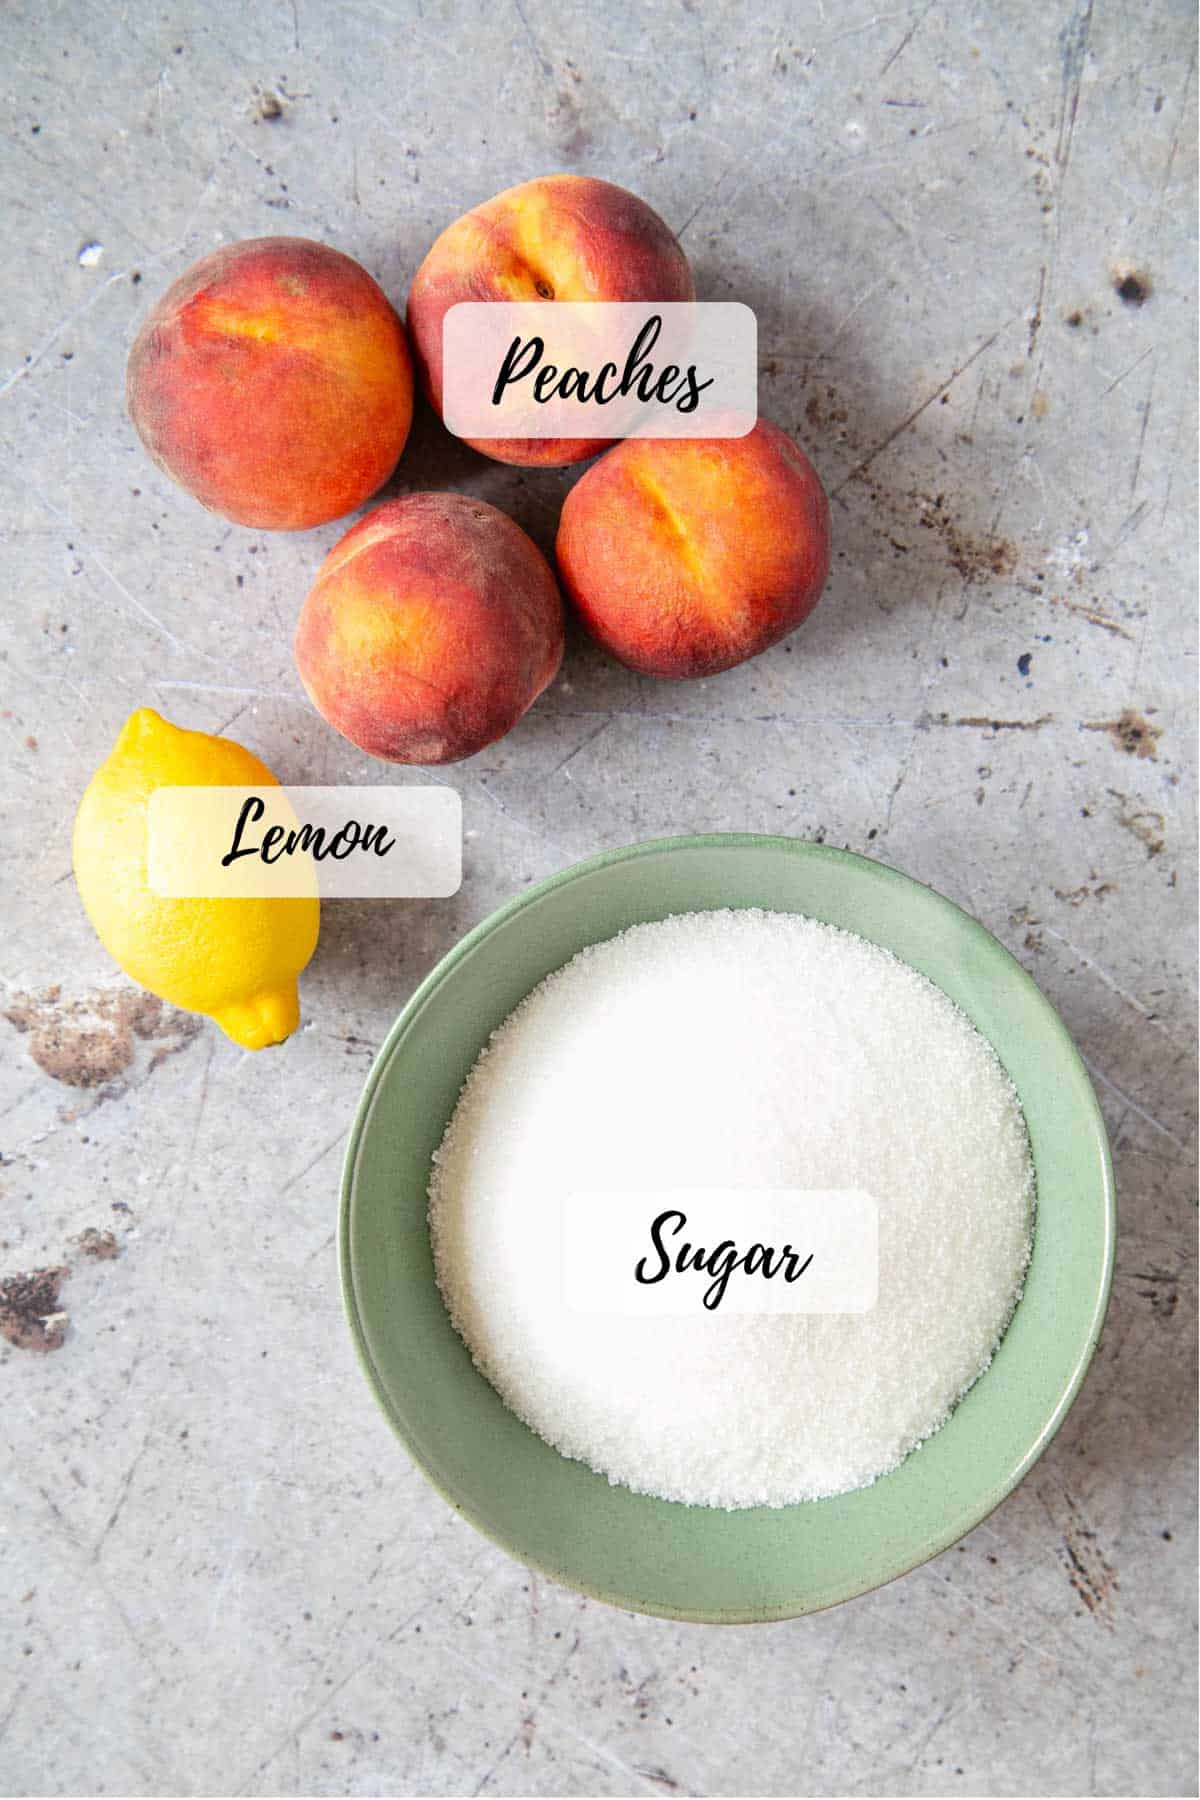 Ingredients for peach jam - peaches, lemon and white sugar